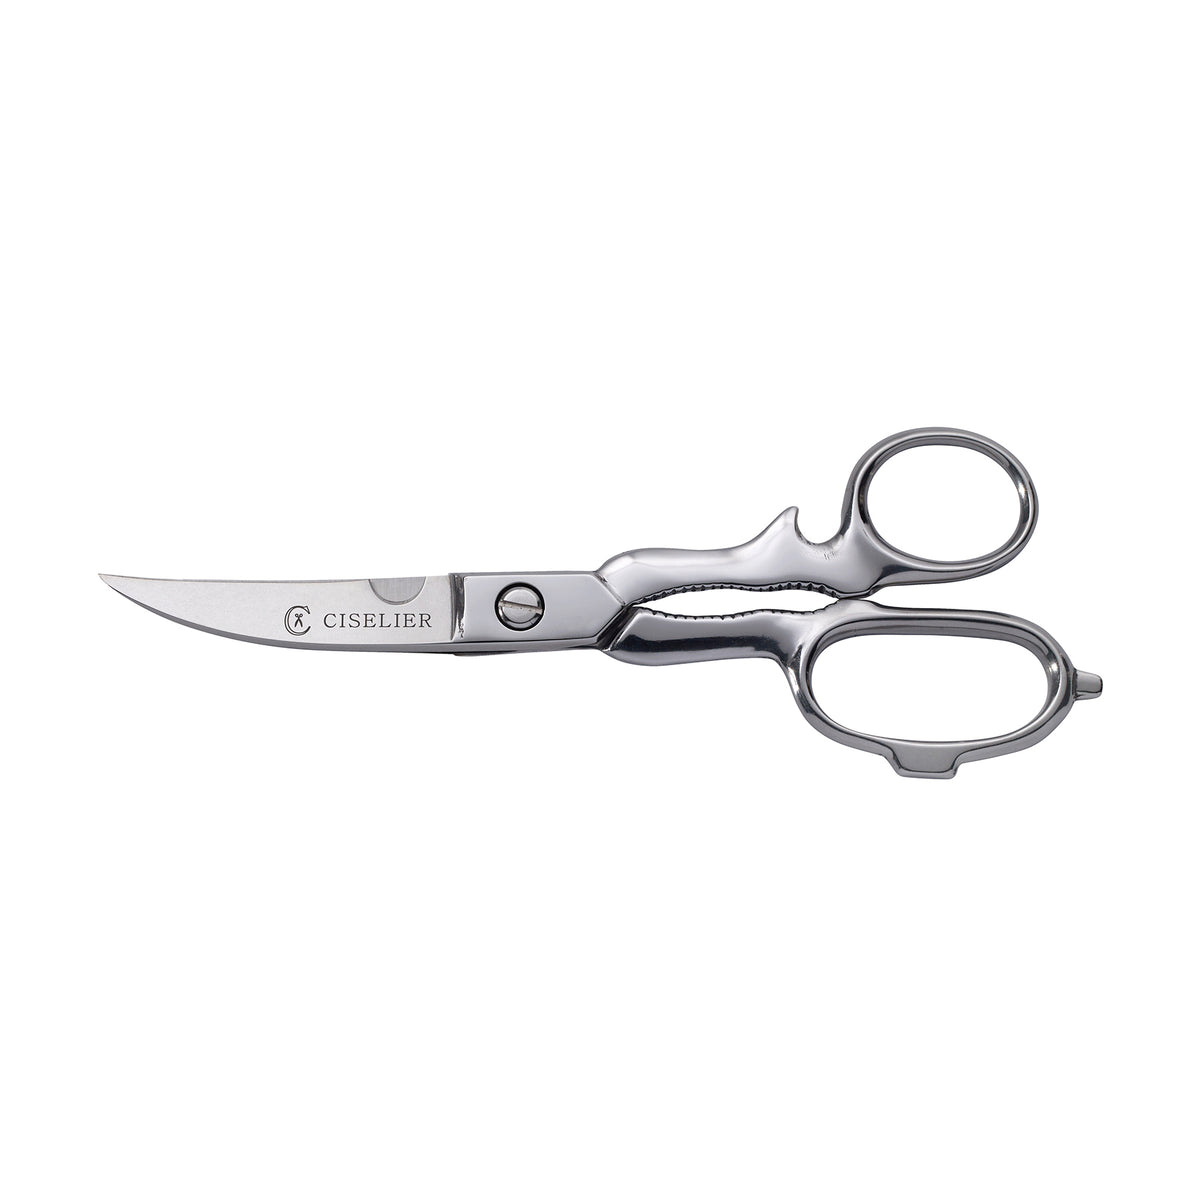 William Whiteley kitchen scissors